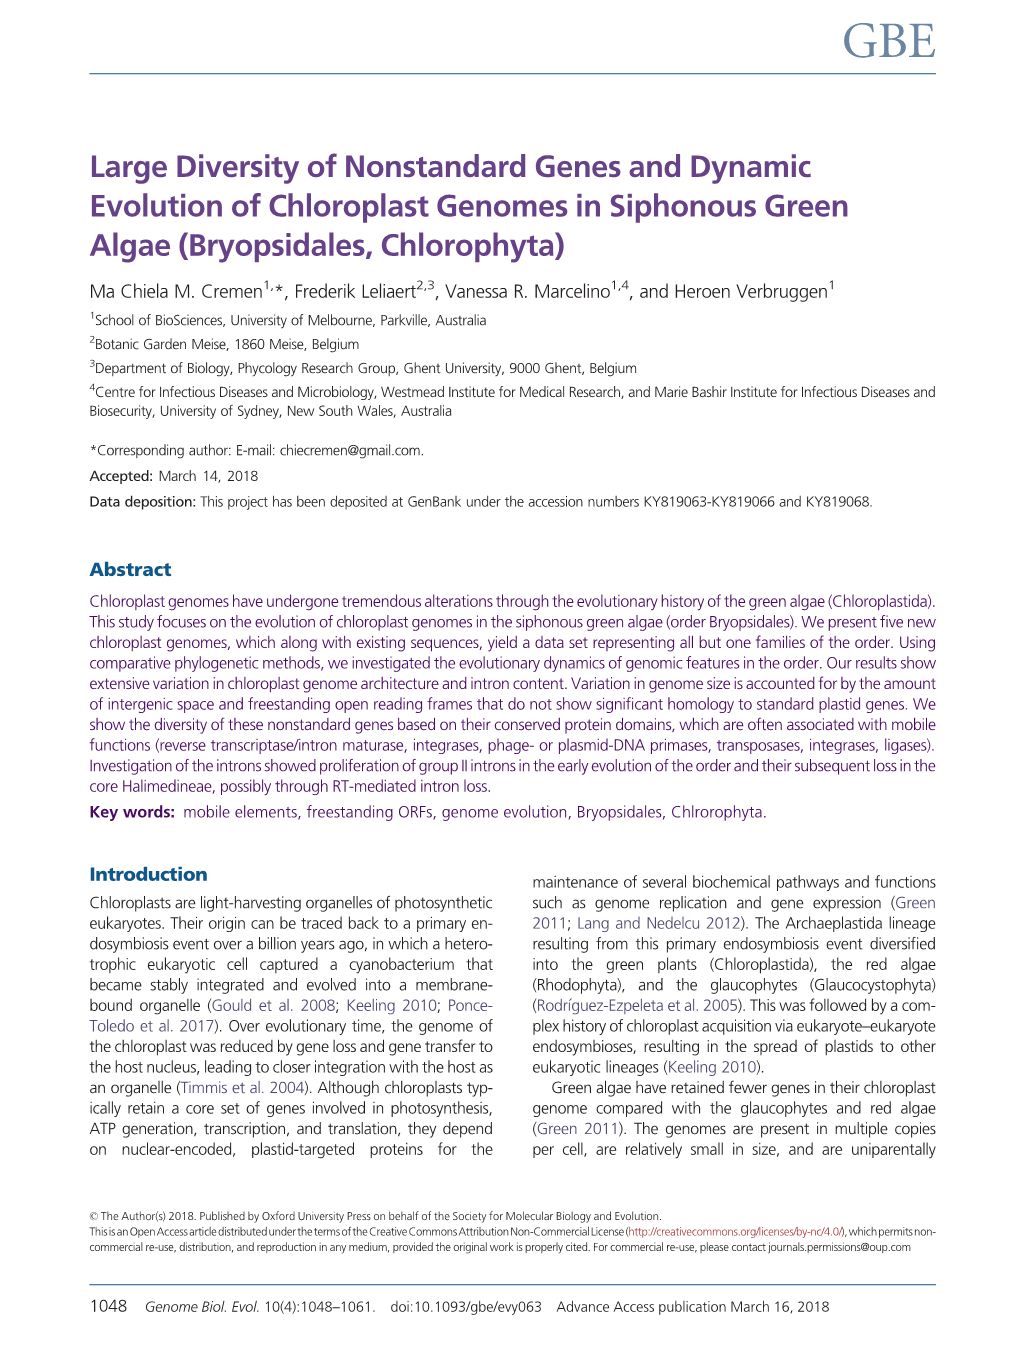 Large Diversity of Nonstandard Genes and Dynamic Evolution of Chloroplast Genomes in Siphonous Green Algae (Bryopsidales, Chlorophyta)